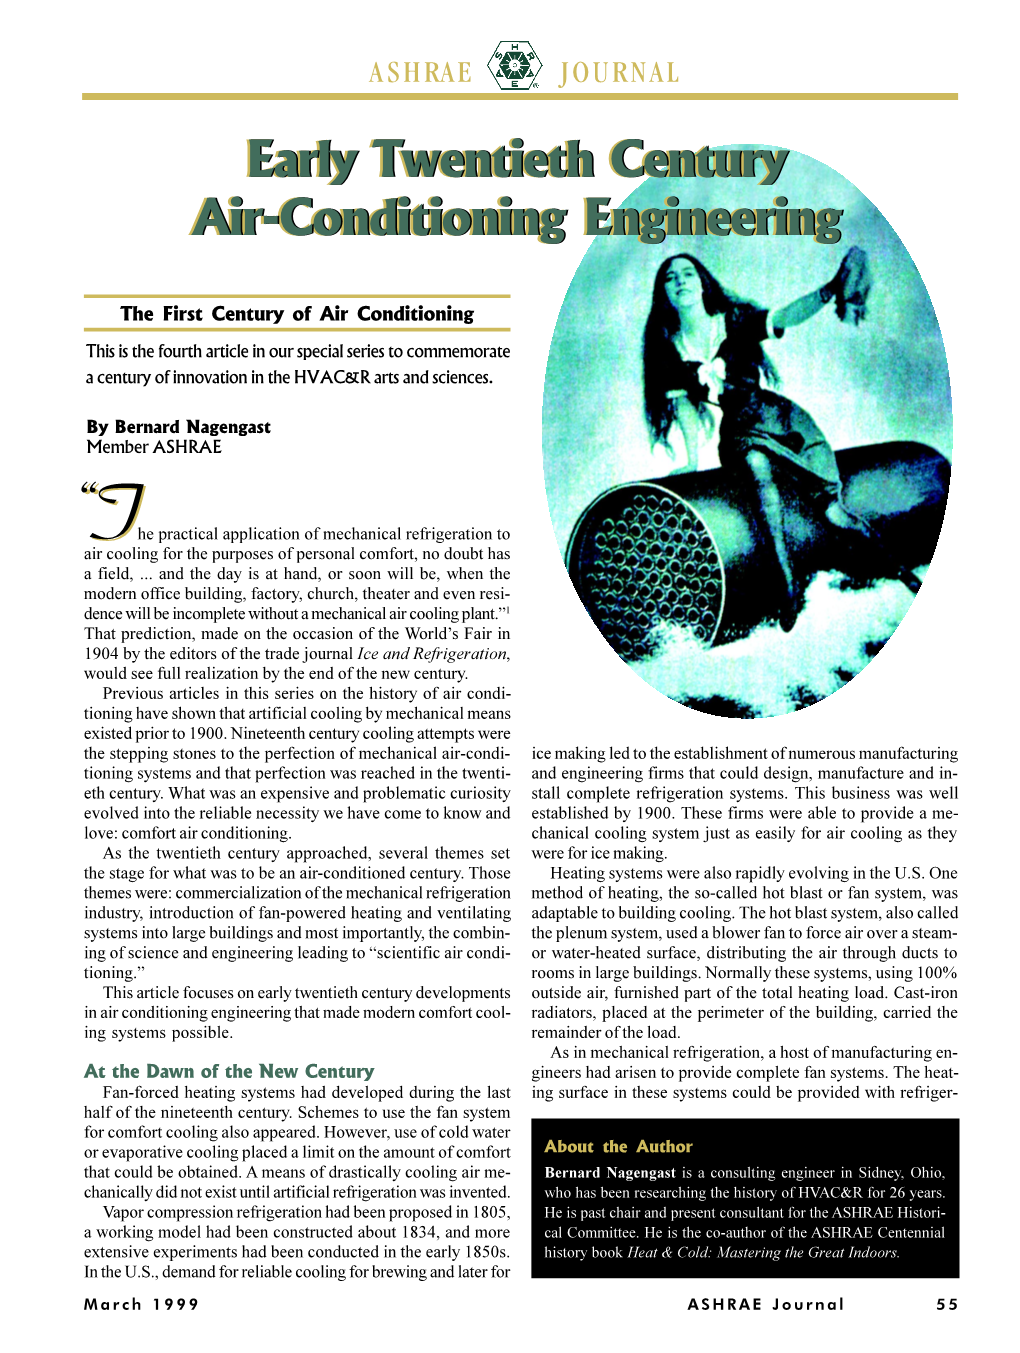 Early Twentieth Century Air-Conditioning Engineering